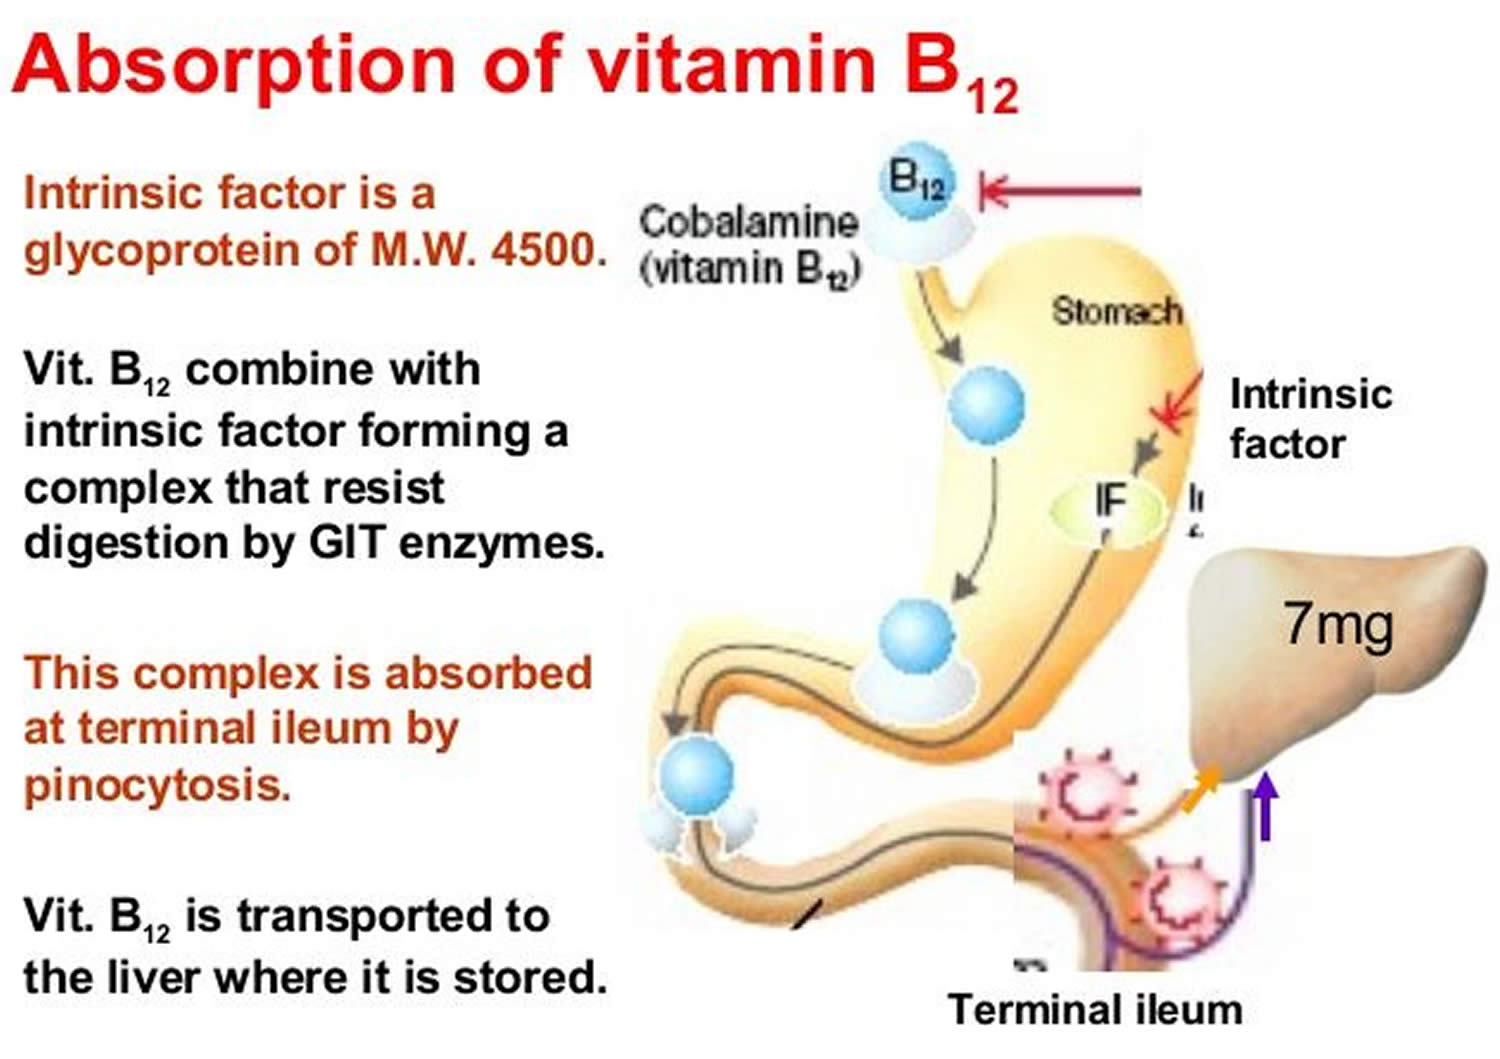 Vitamin B12 absorption and transport